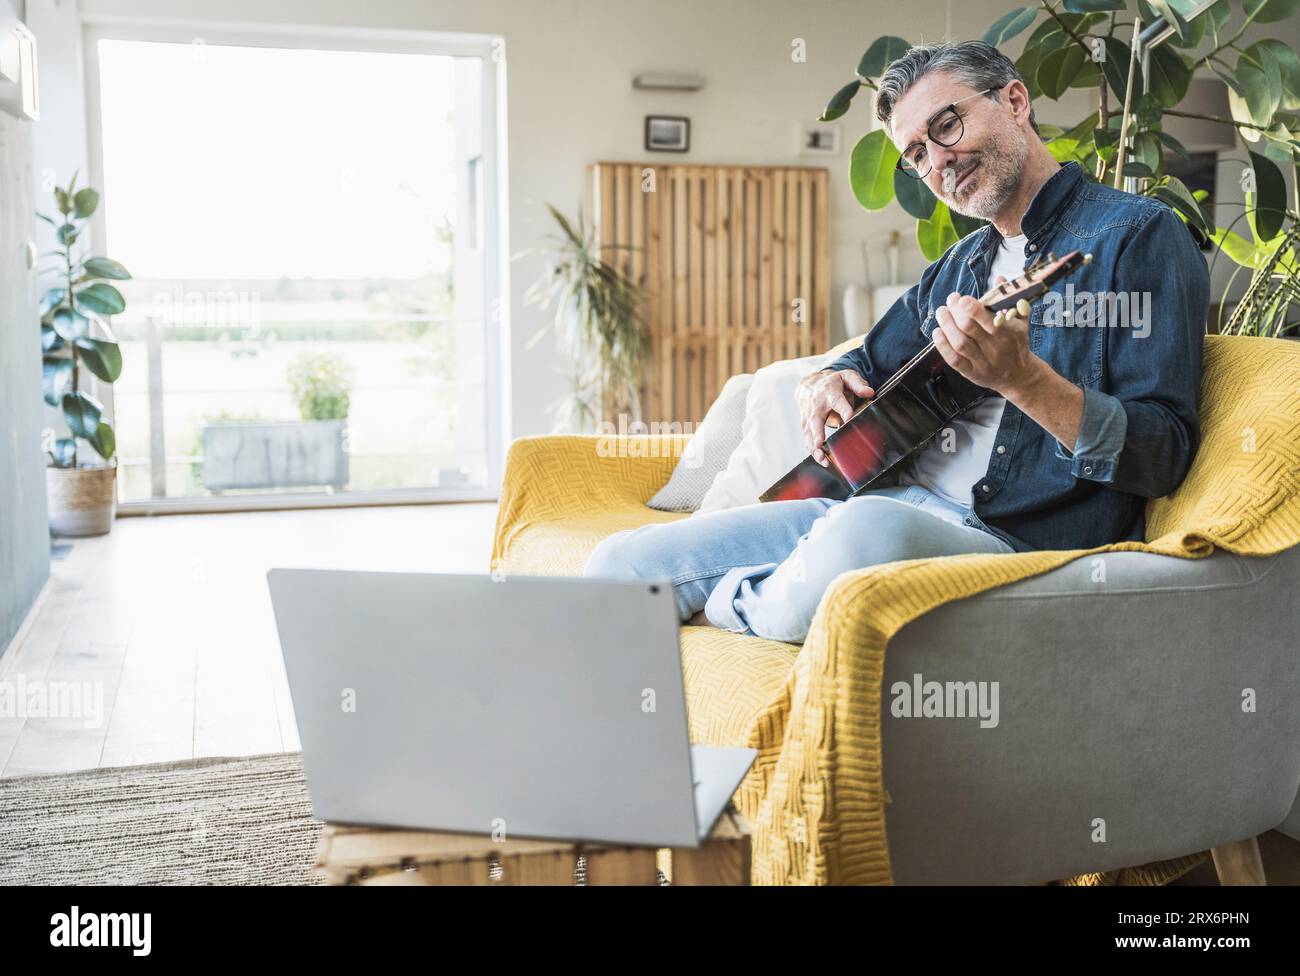 Man playing guitar watching tutorial on laptop at home Stock Photo